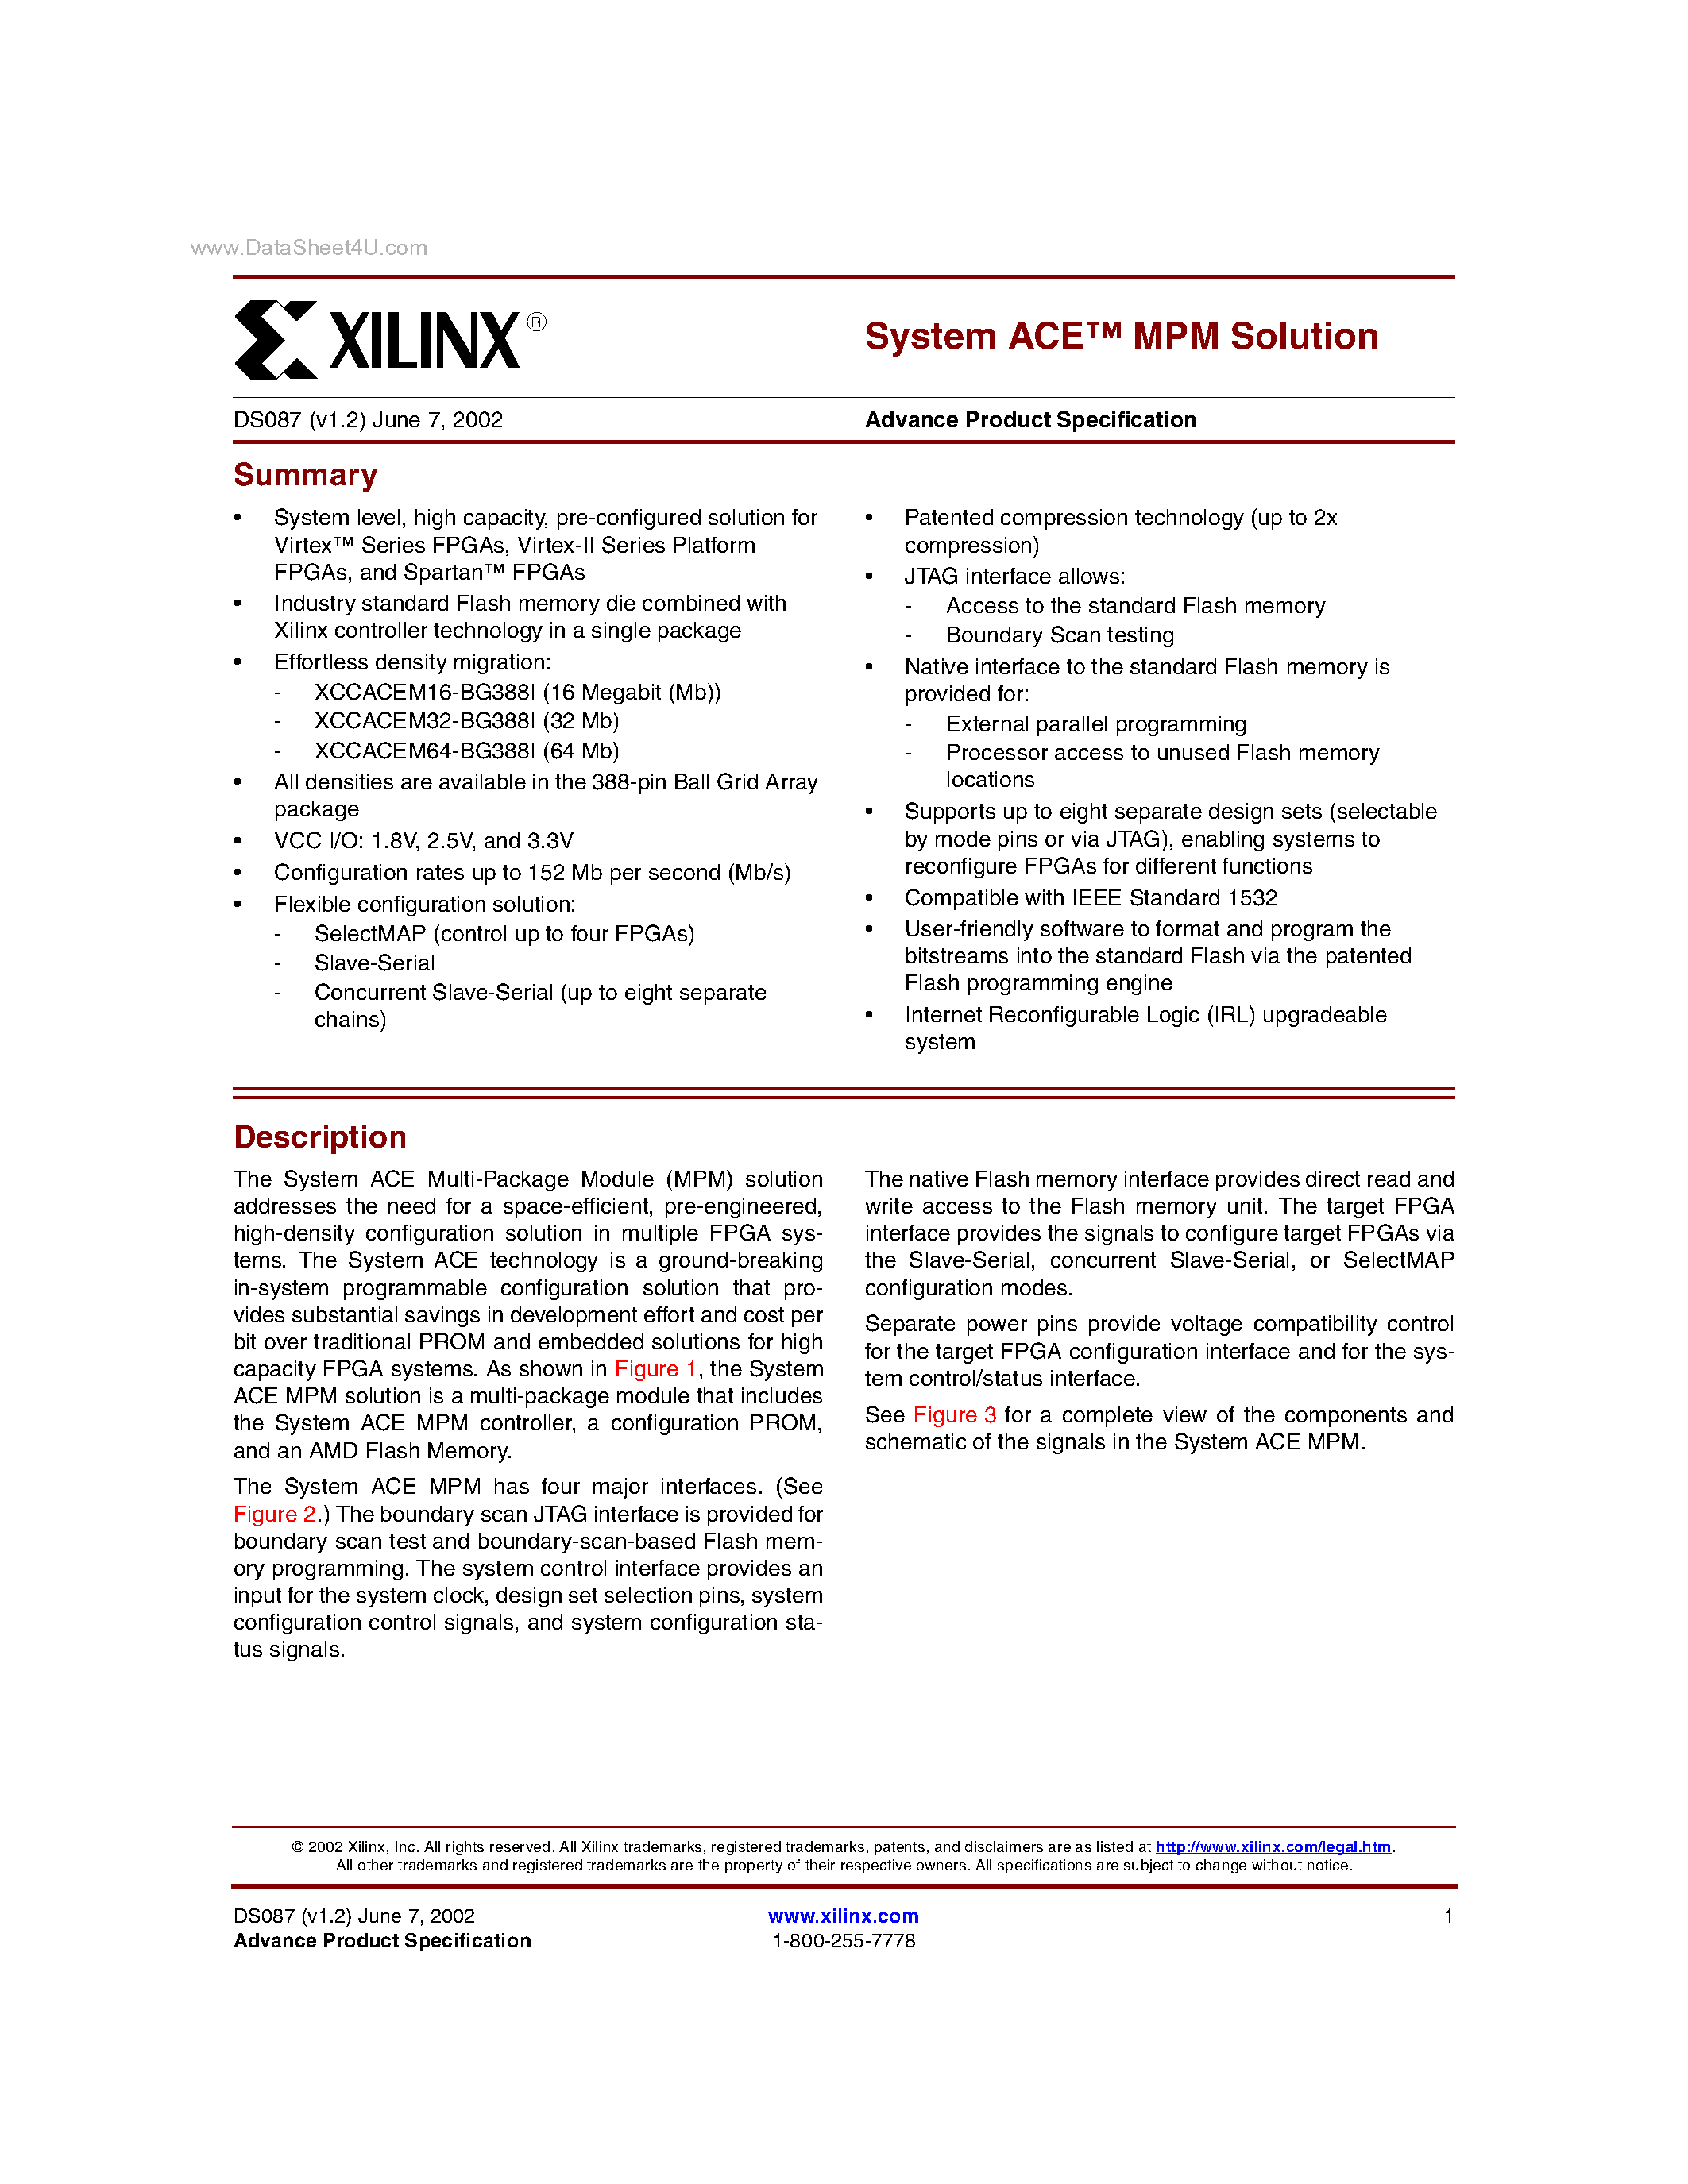 Datasheet XCCACEM16 - (XCCACEM16 - XCCACEM64) System ACE MPM Solution page 1